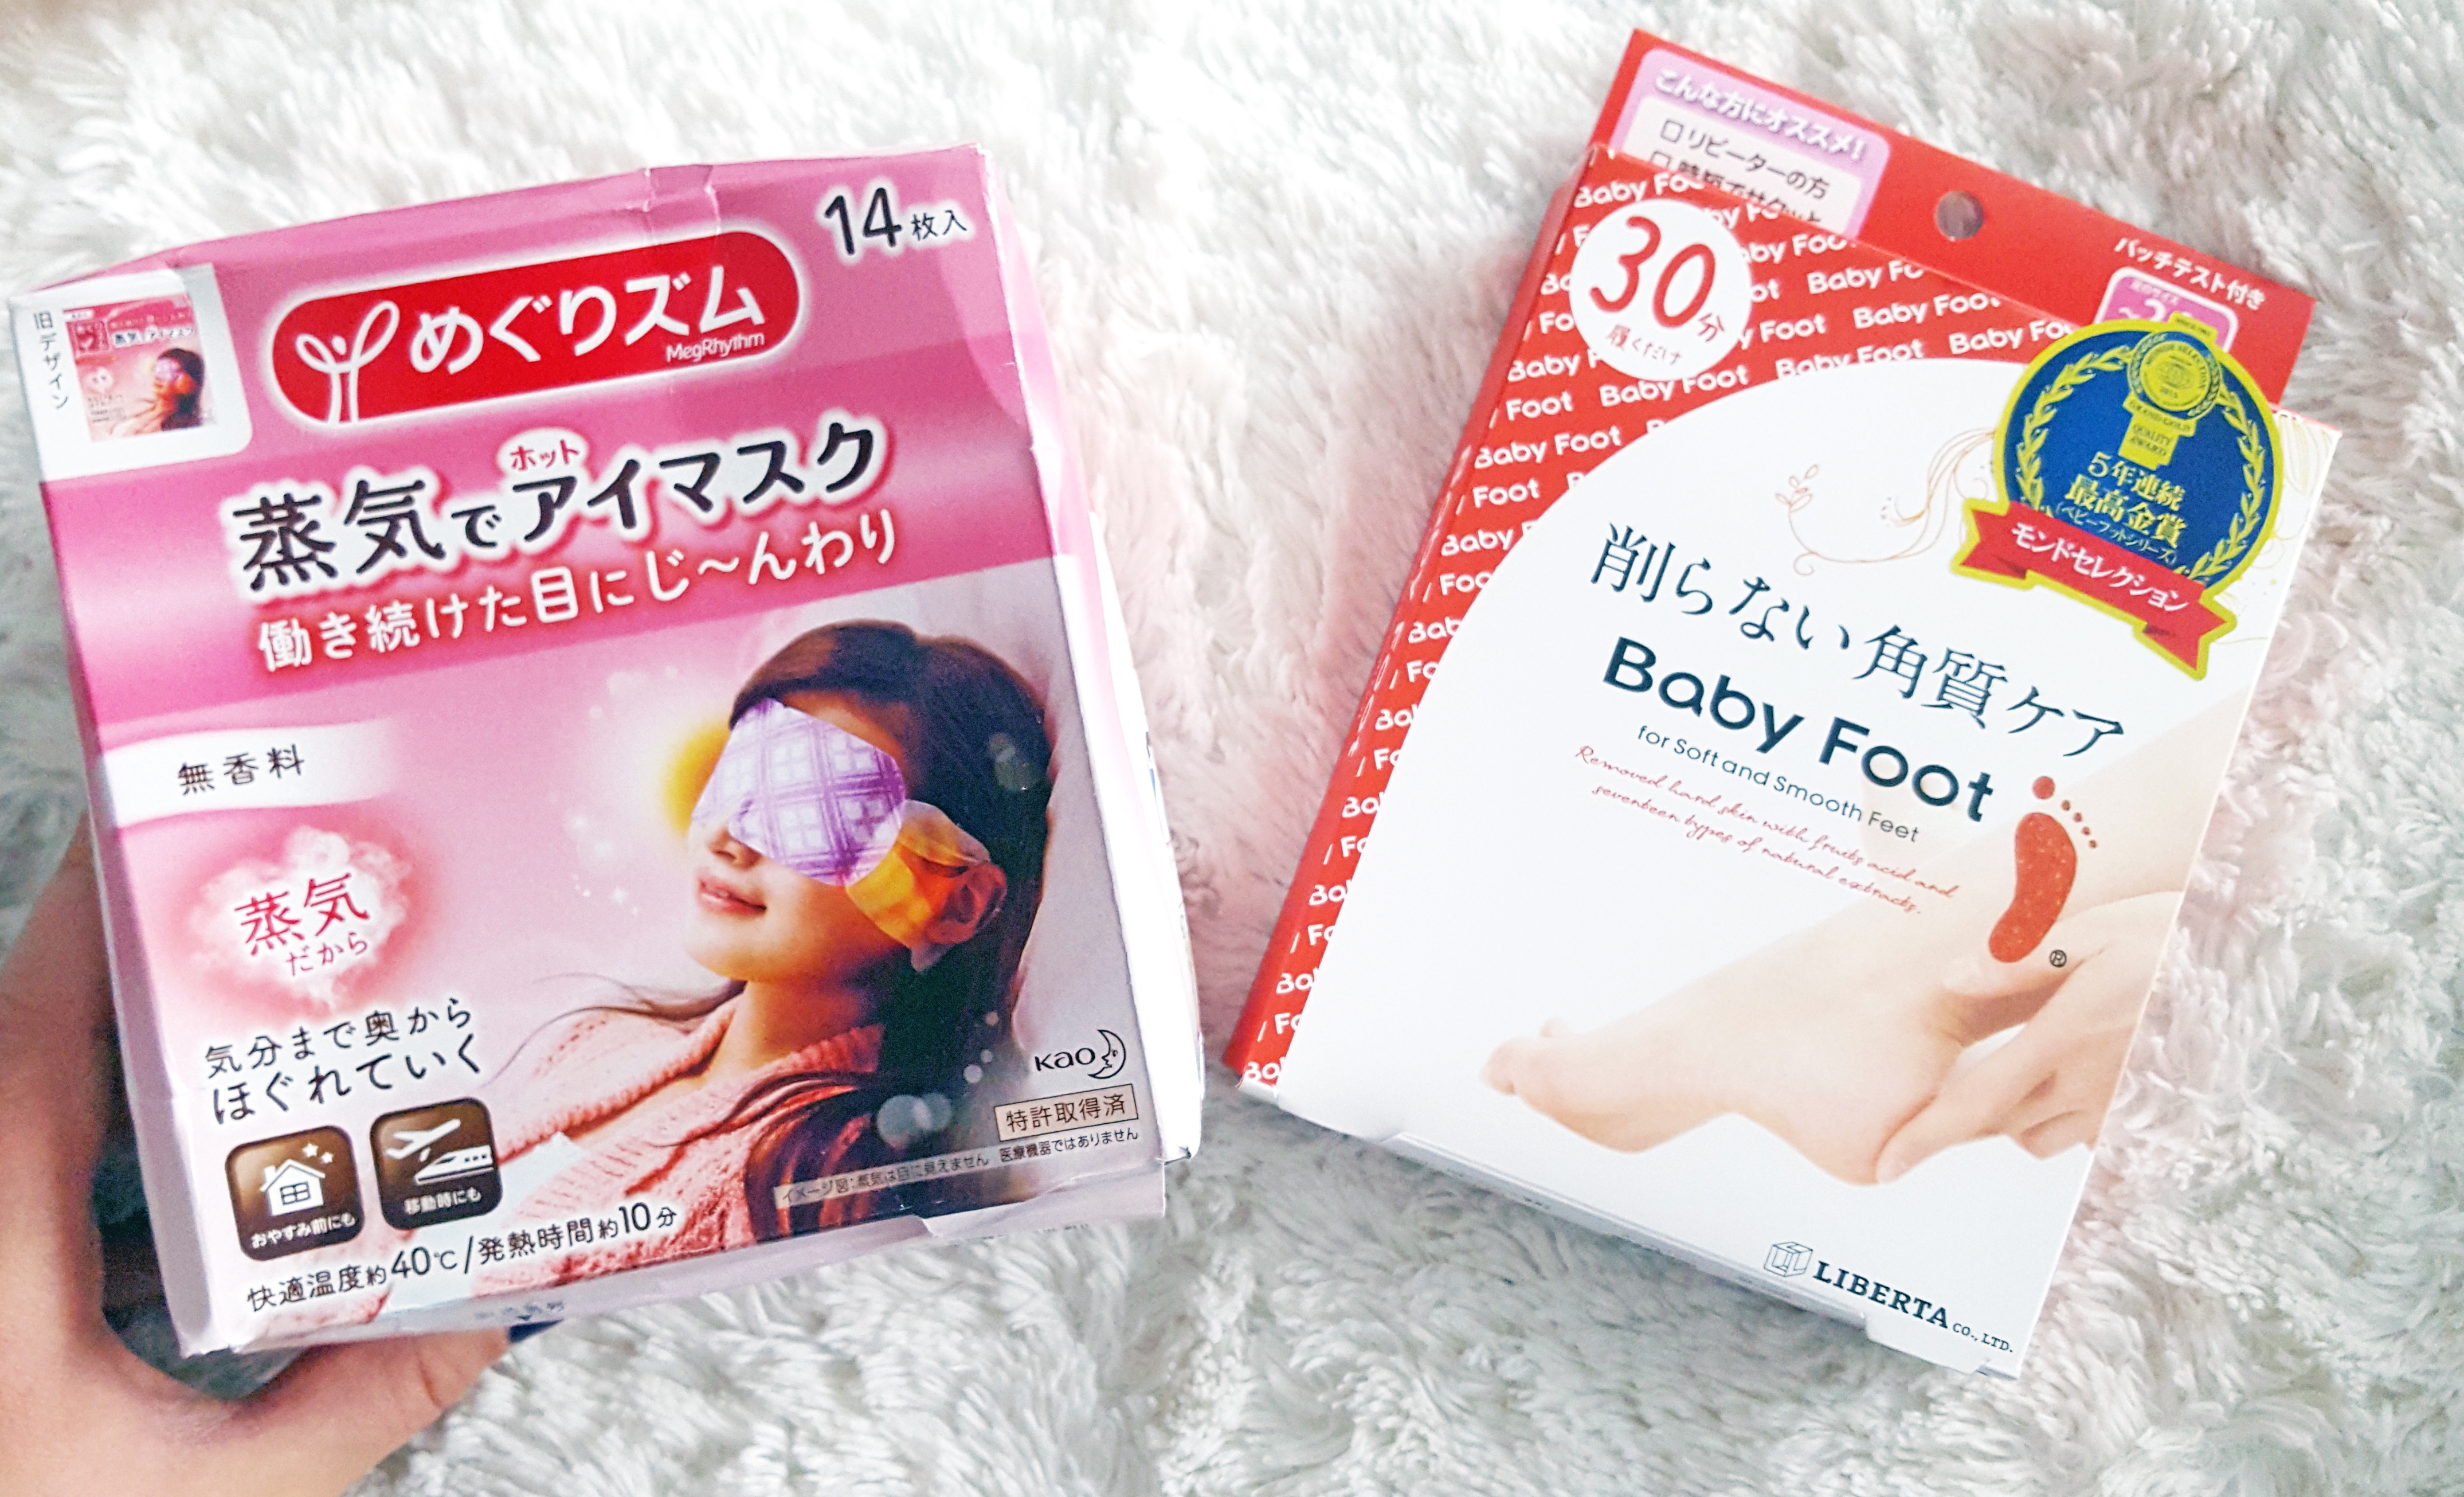 hot eye mask and baby foot Japanese beauty